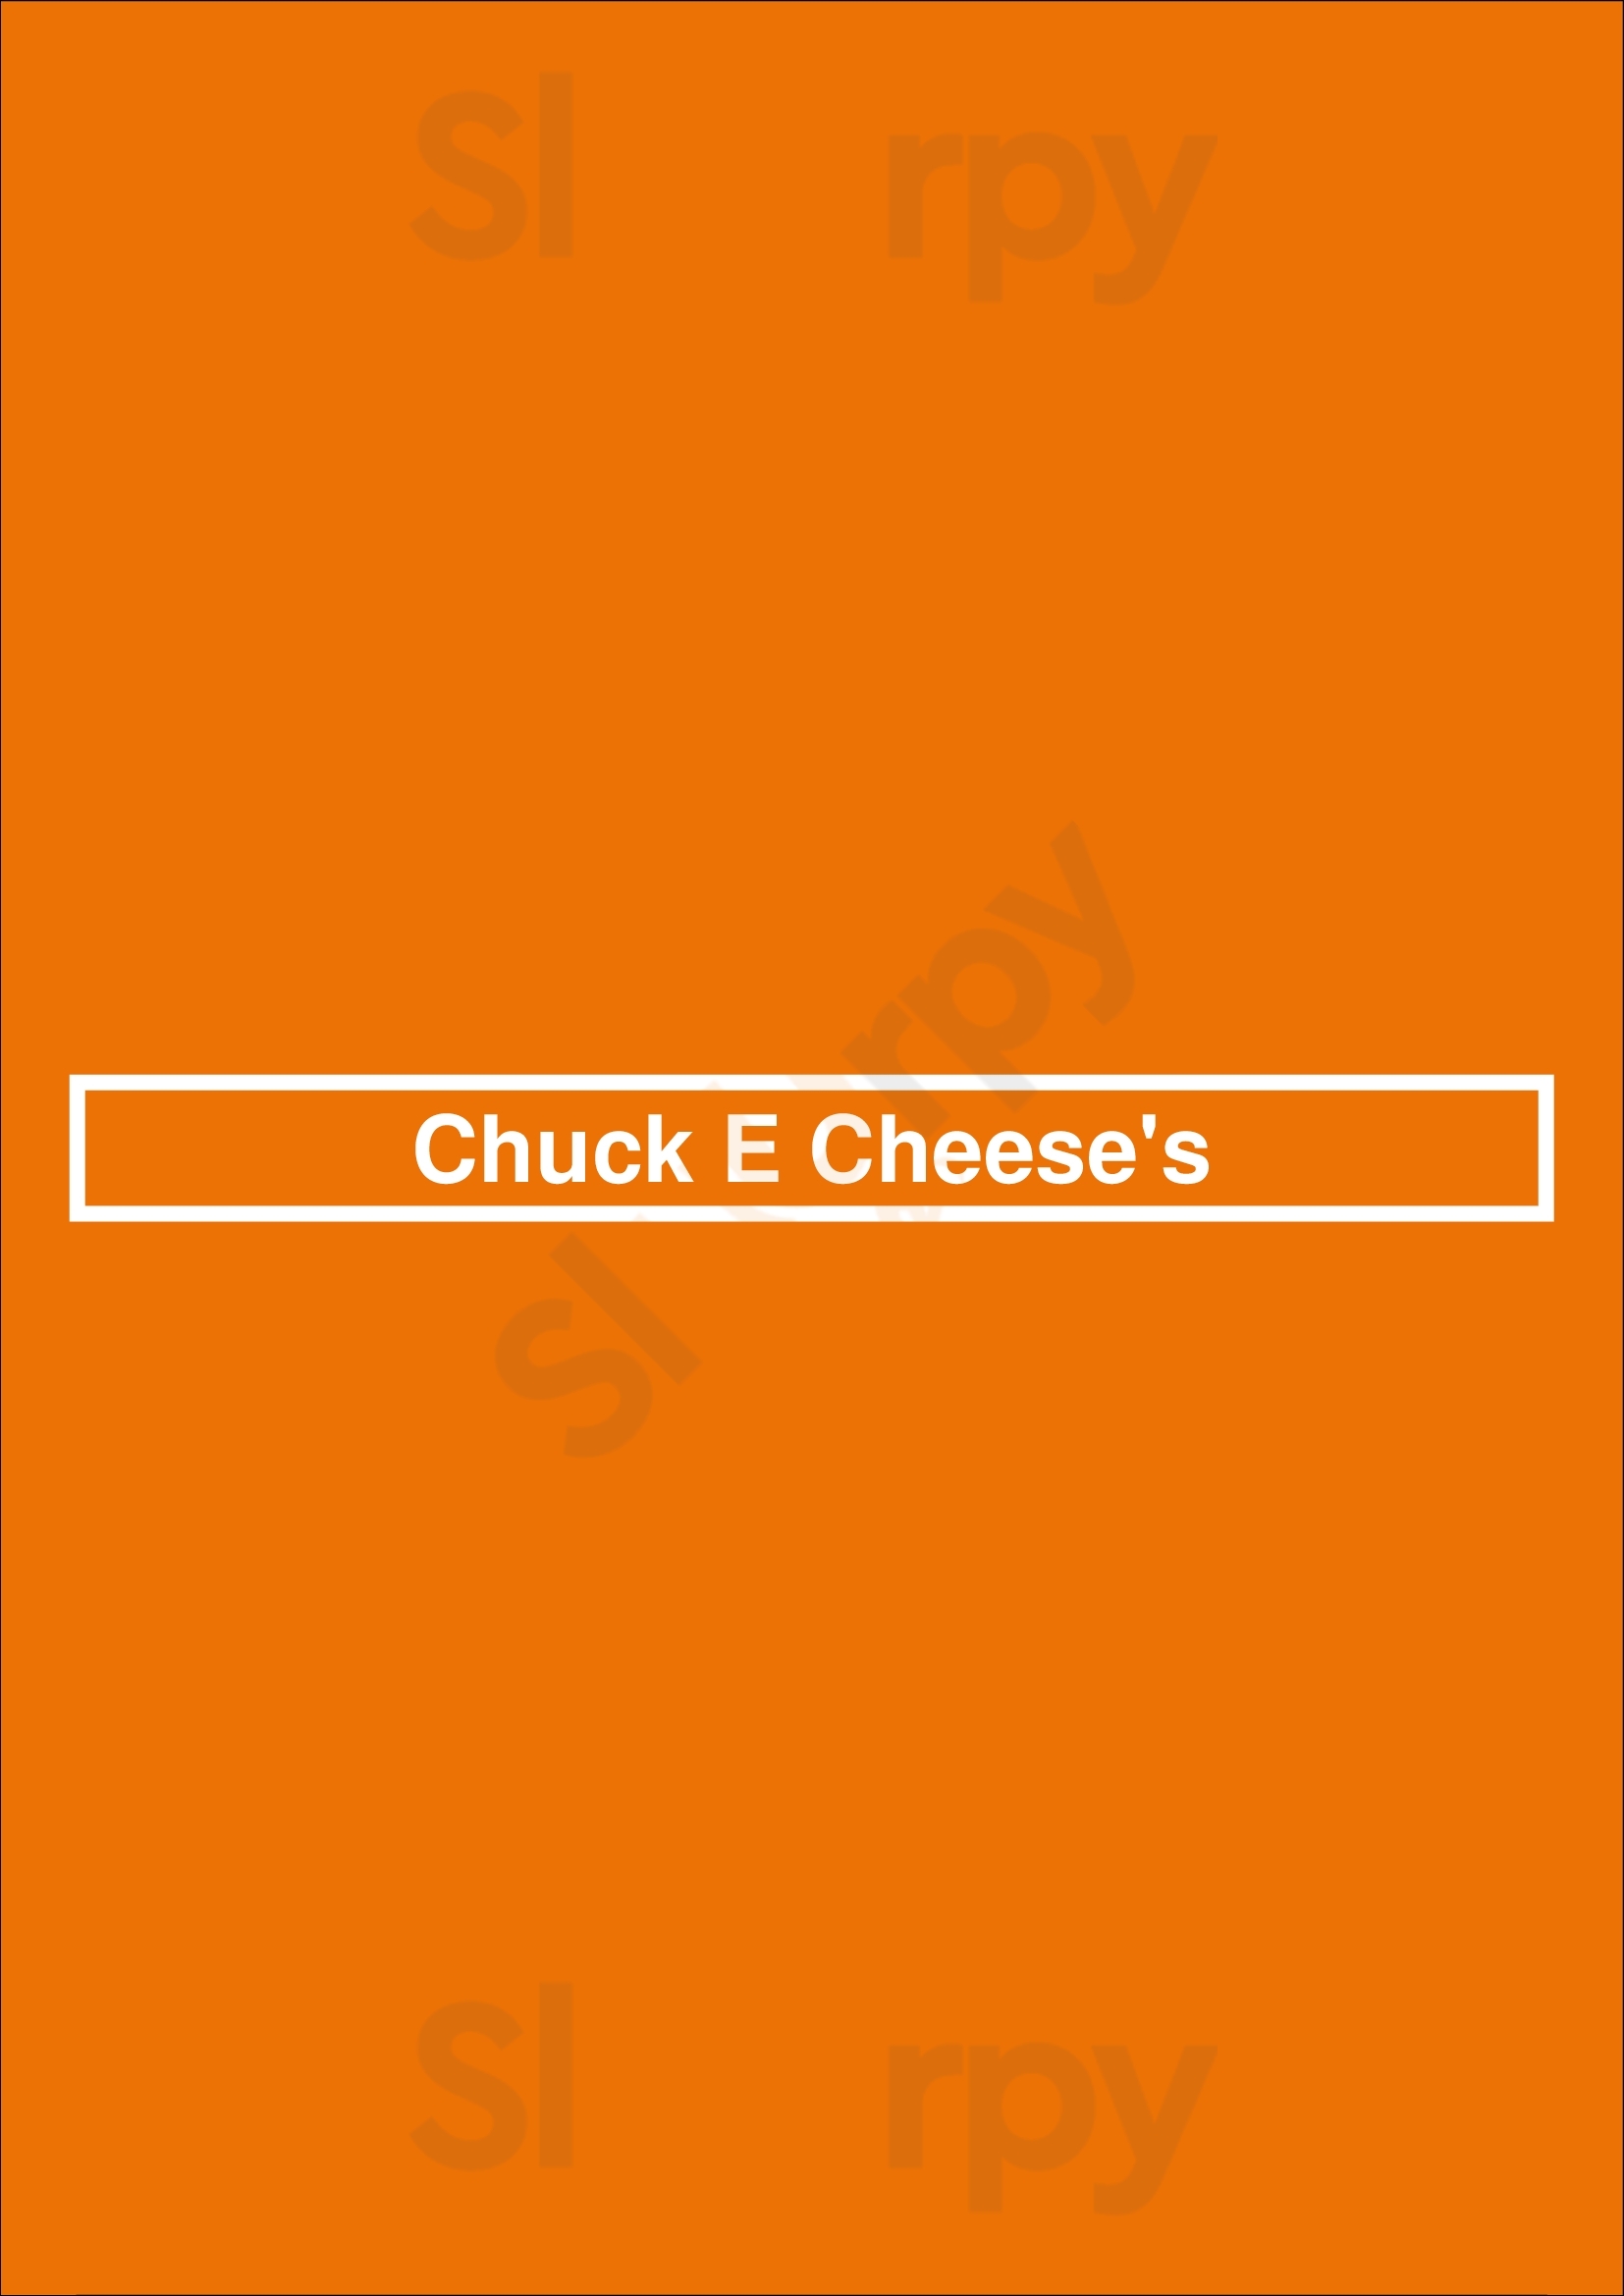 Chuck E. Cheese Salt Lake City Menu - 1